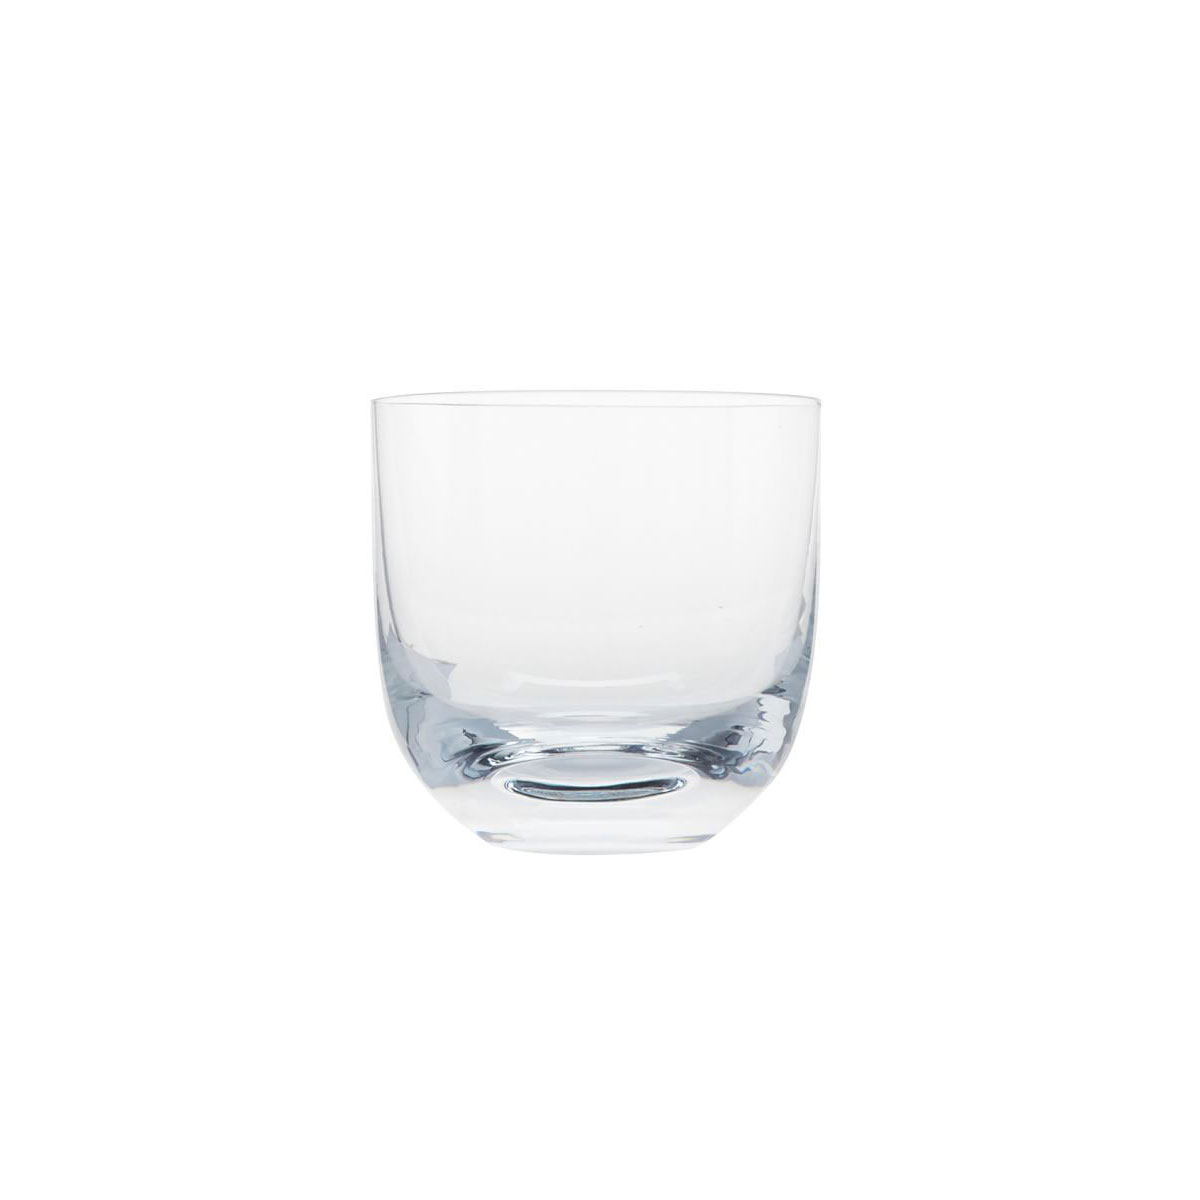 Schott Zwiesel Tritan Crystal, Audrey Crystal Whiskey Glass, Single